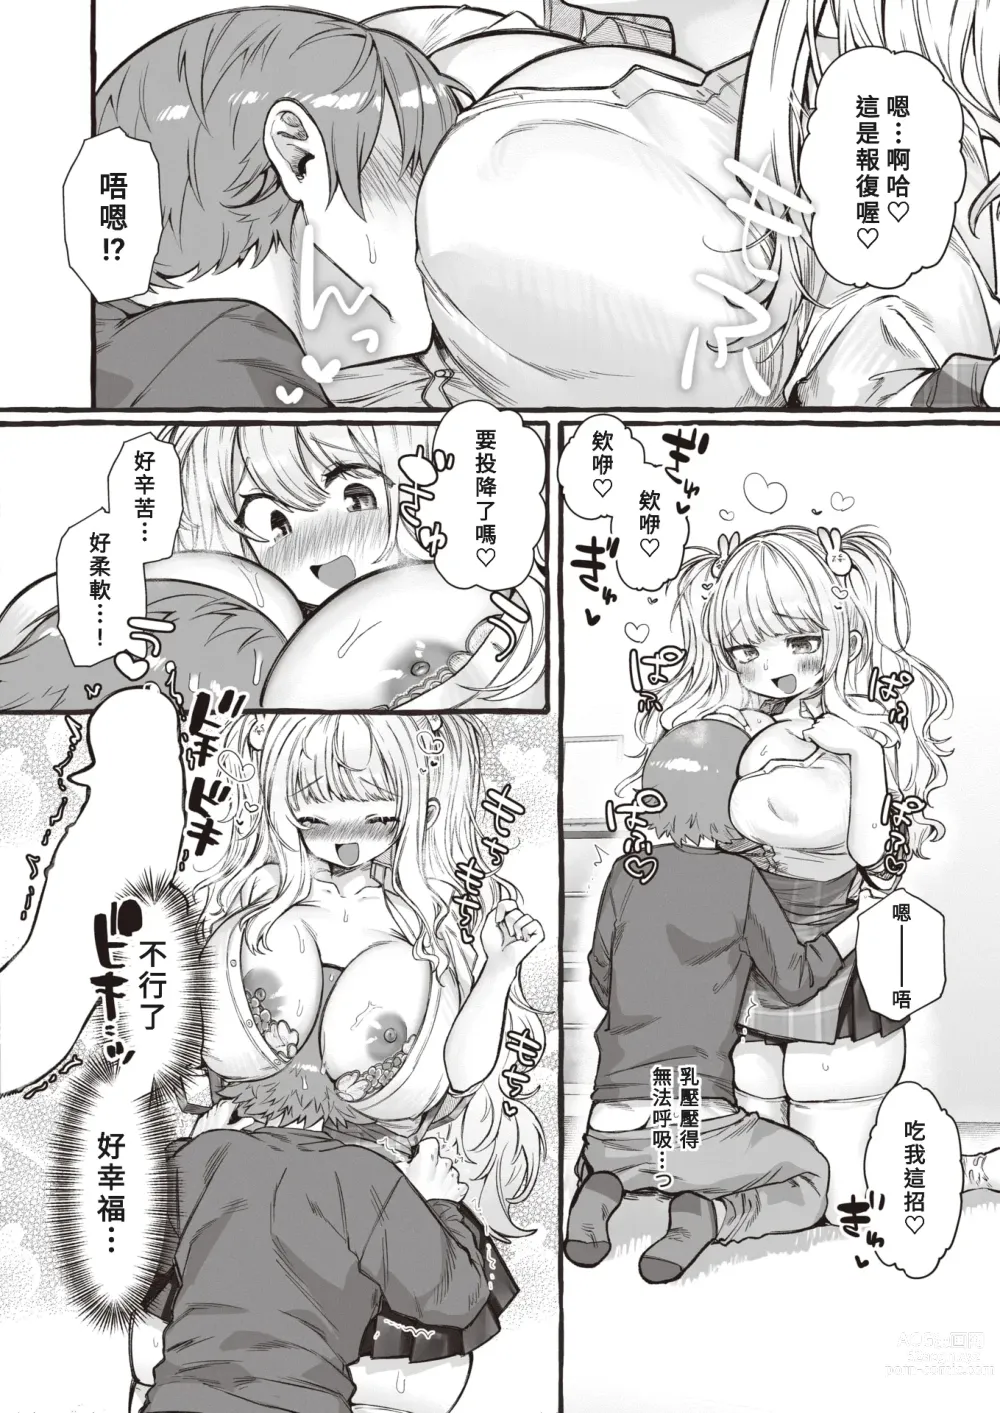 Page 12 of manga ZOO-Kei Joshi@Usagi